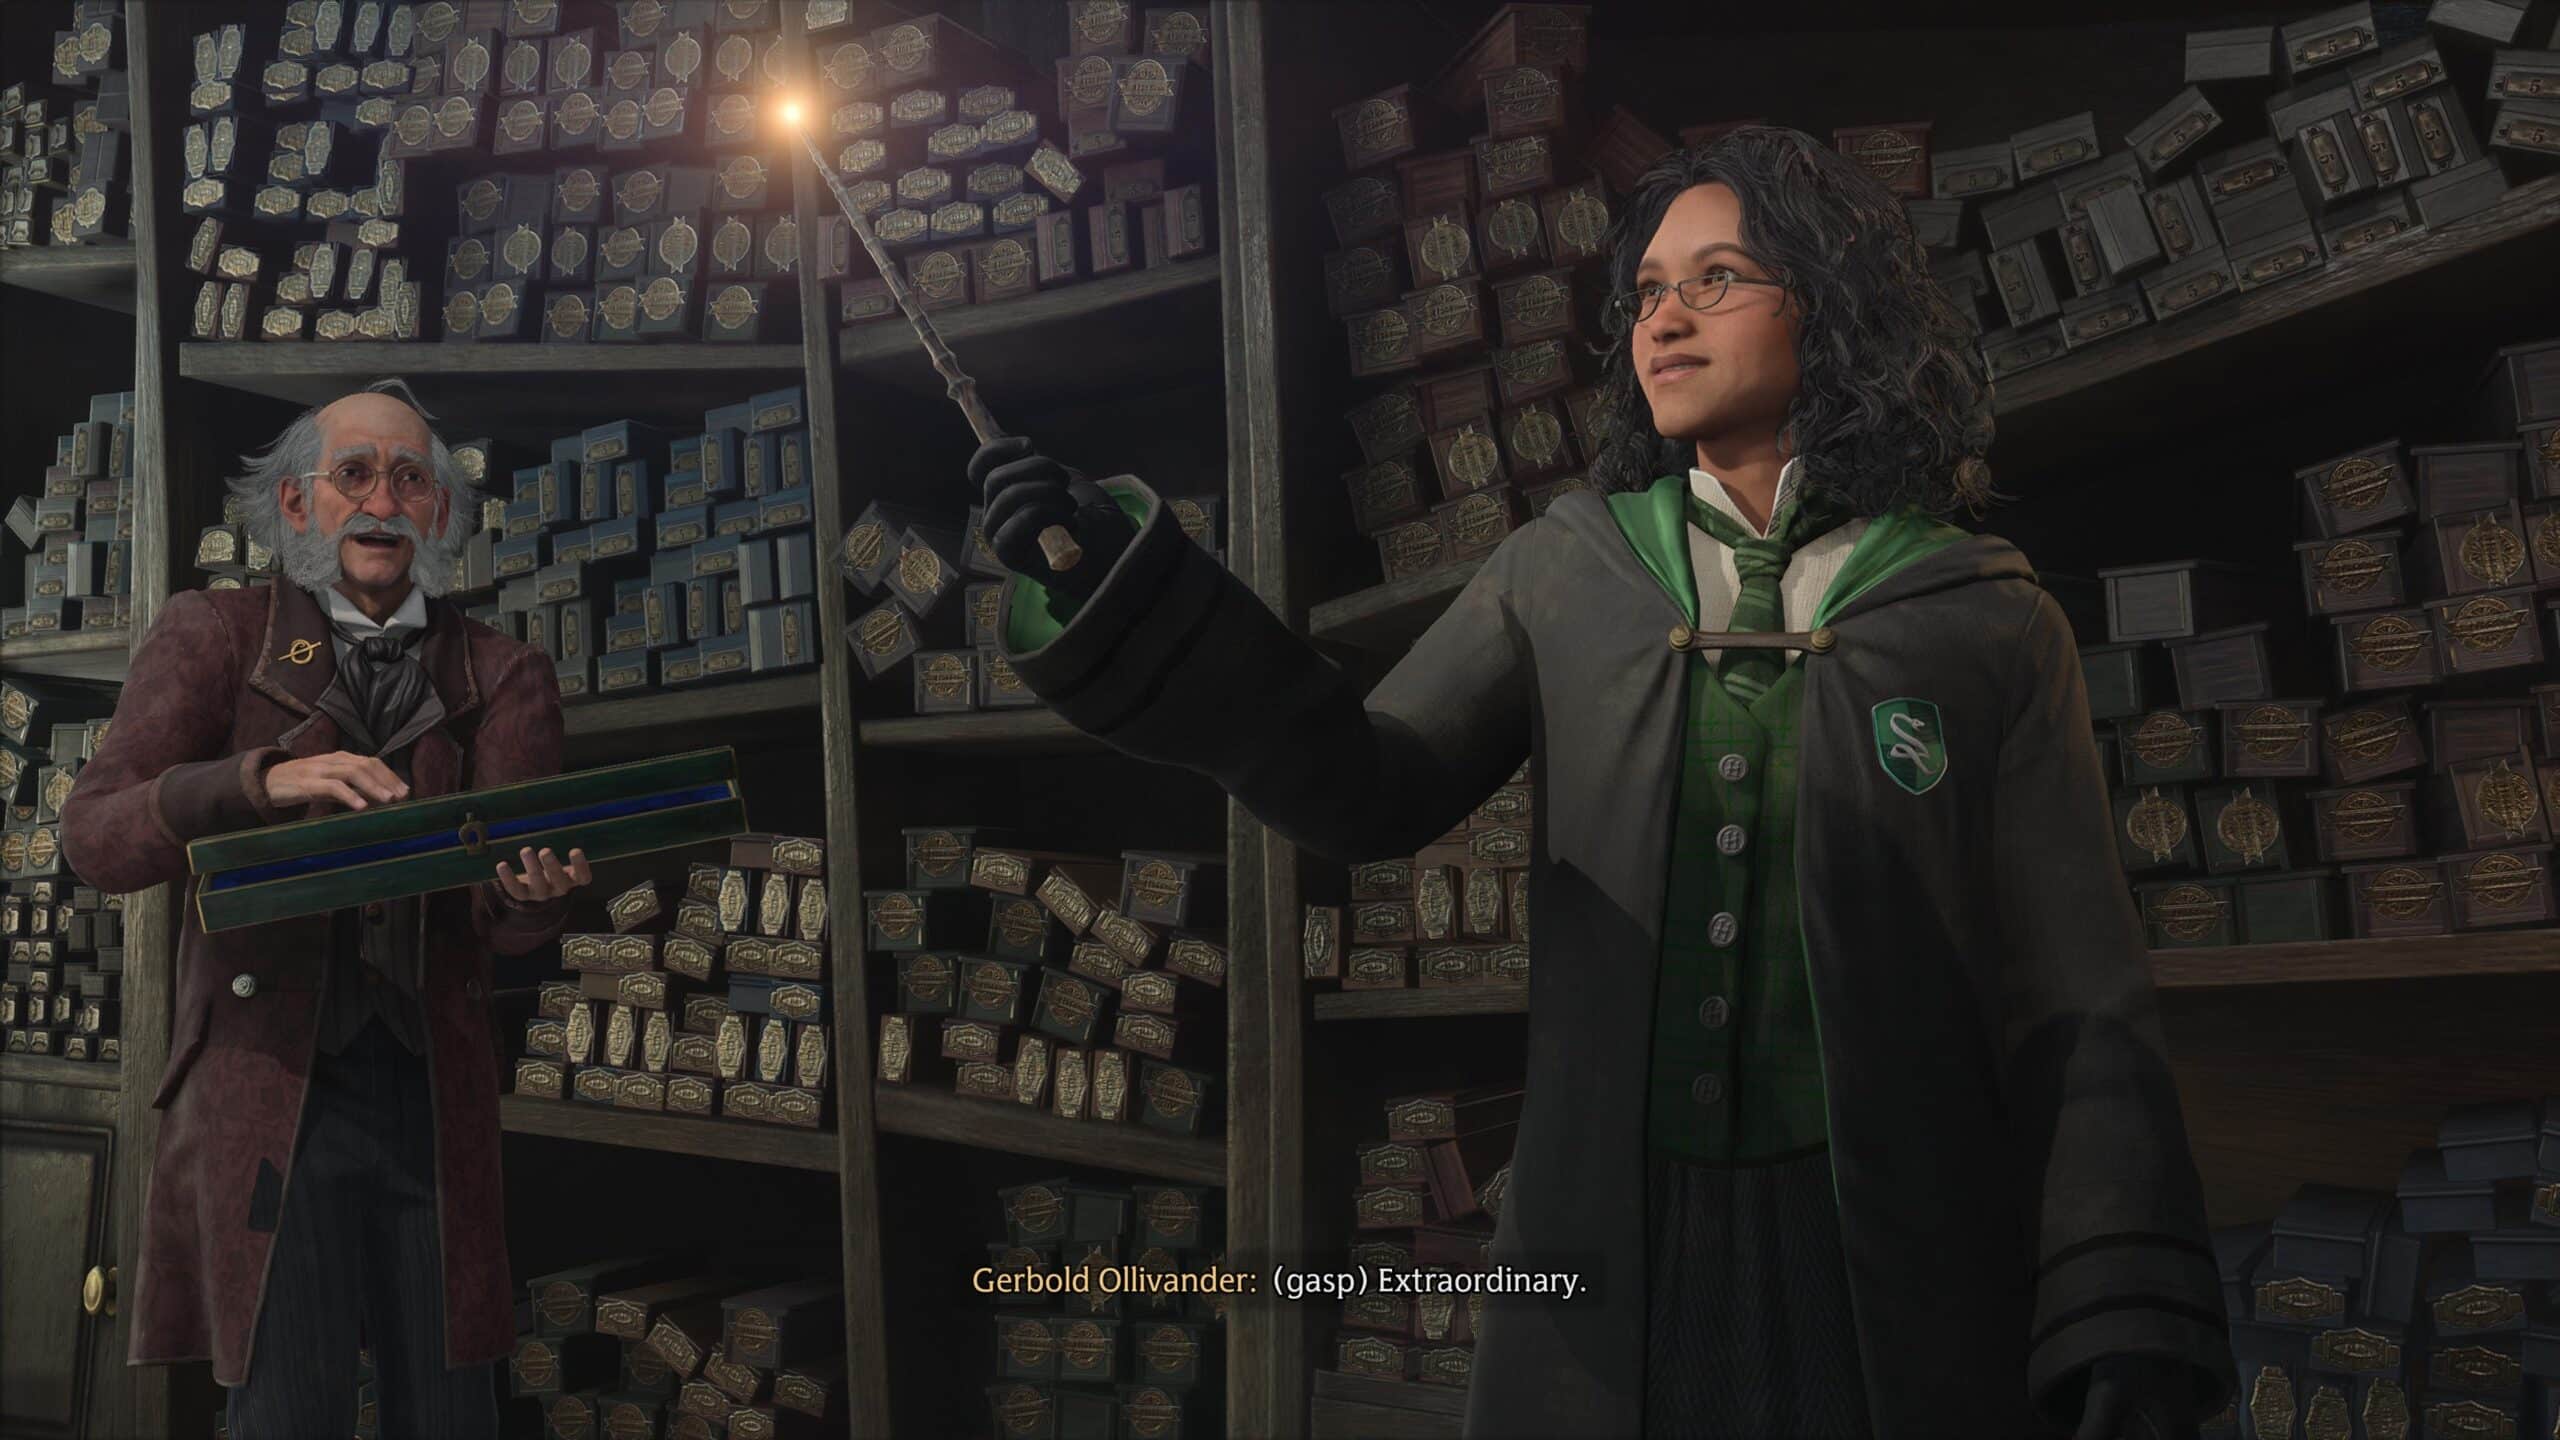 Jogo Hogwarts Legacy - PS4 Mídia Física - Warner Games - Jogos de